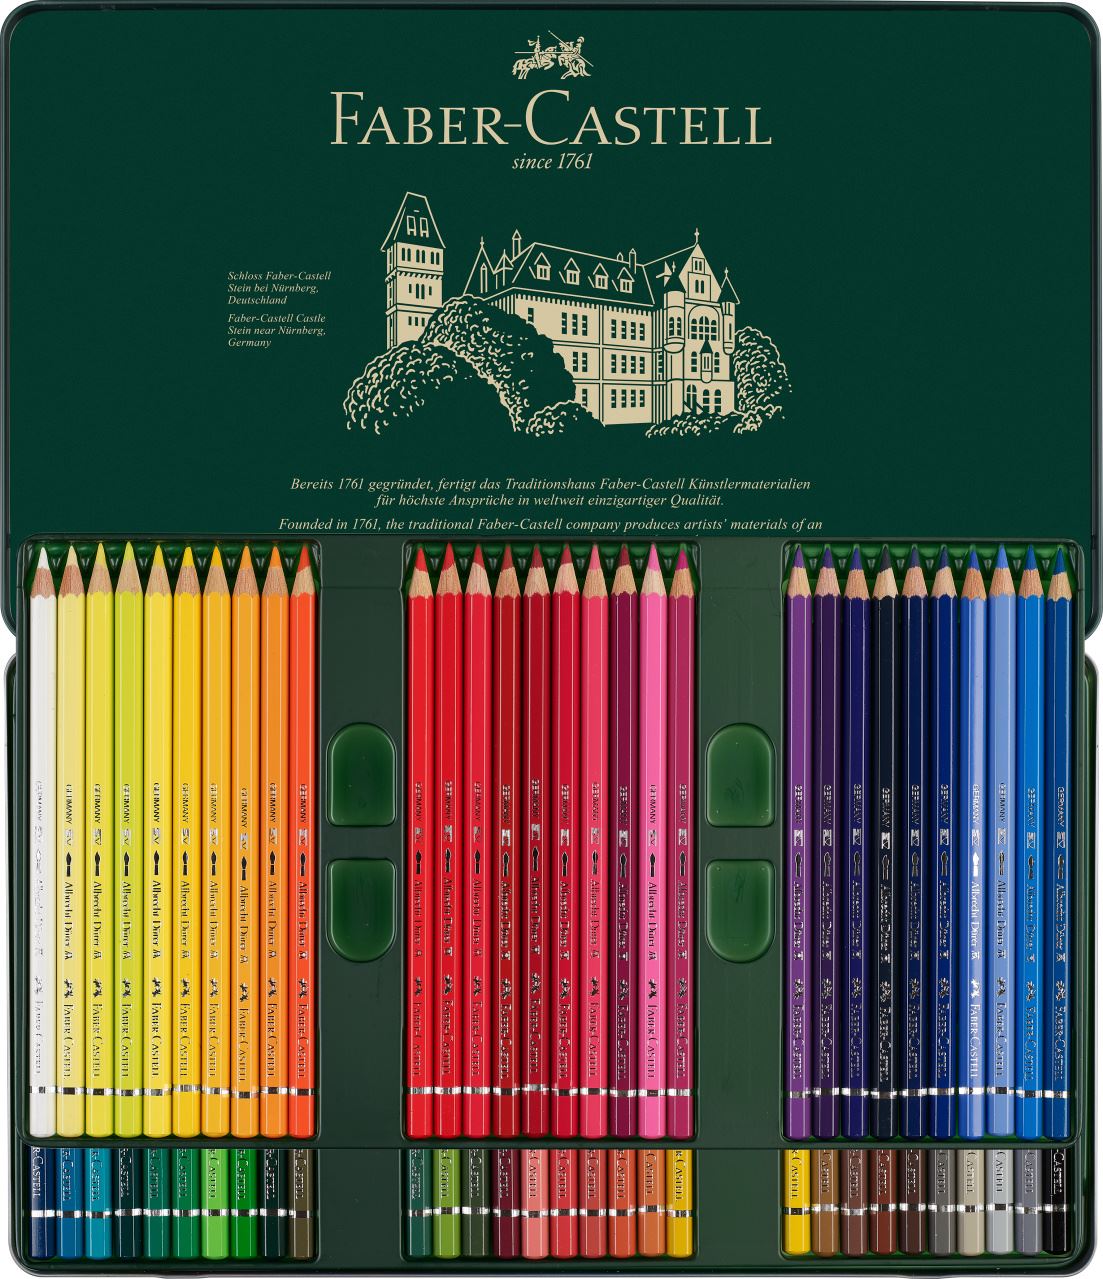 Faber-Castell - Estuche de metal con 60 lápices acuarelables Albrecht Dürer